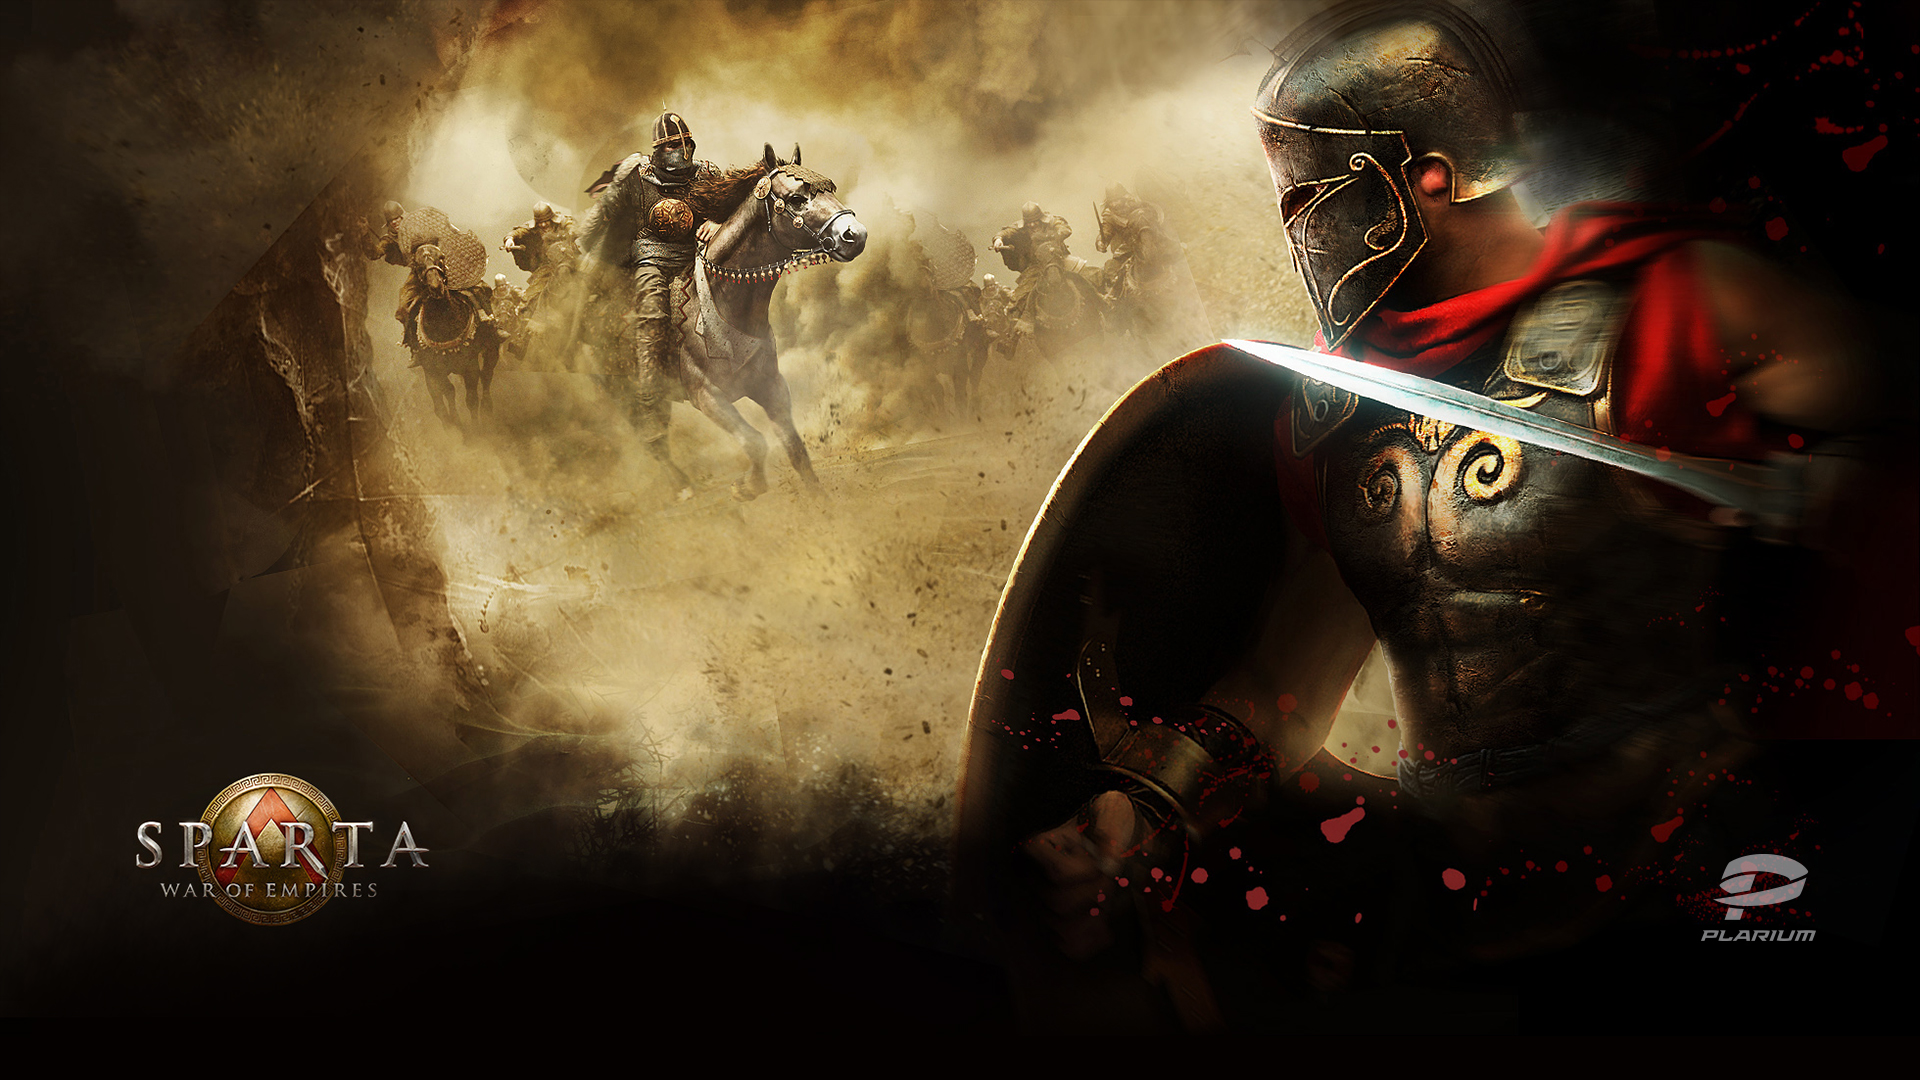 Spartan Master Chief Halo Infinite 4K Ultra HD Mobile Wallpaper